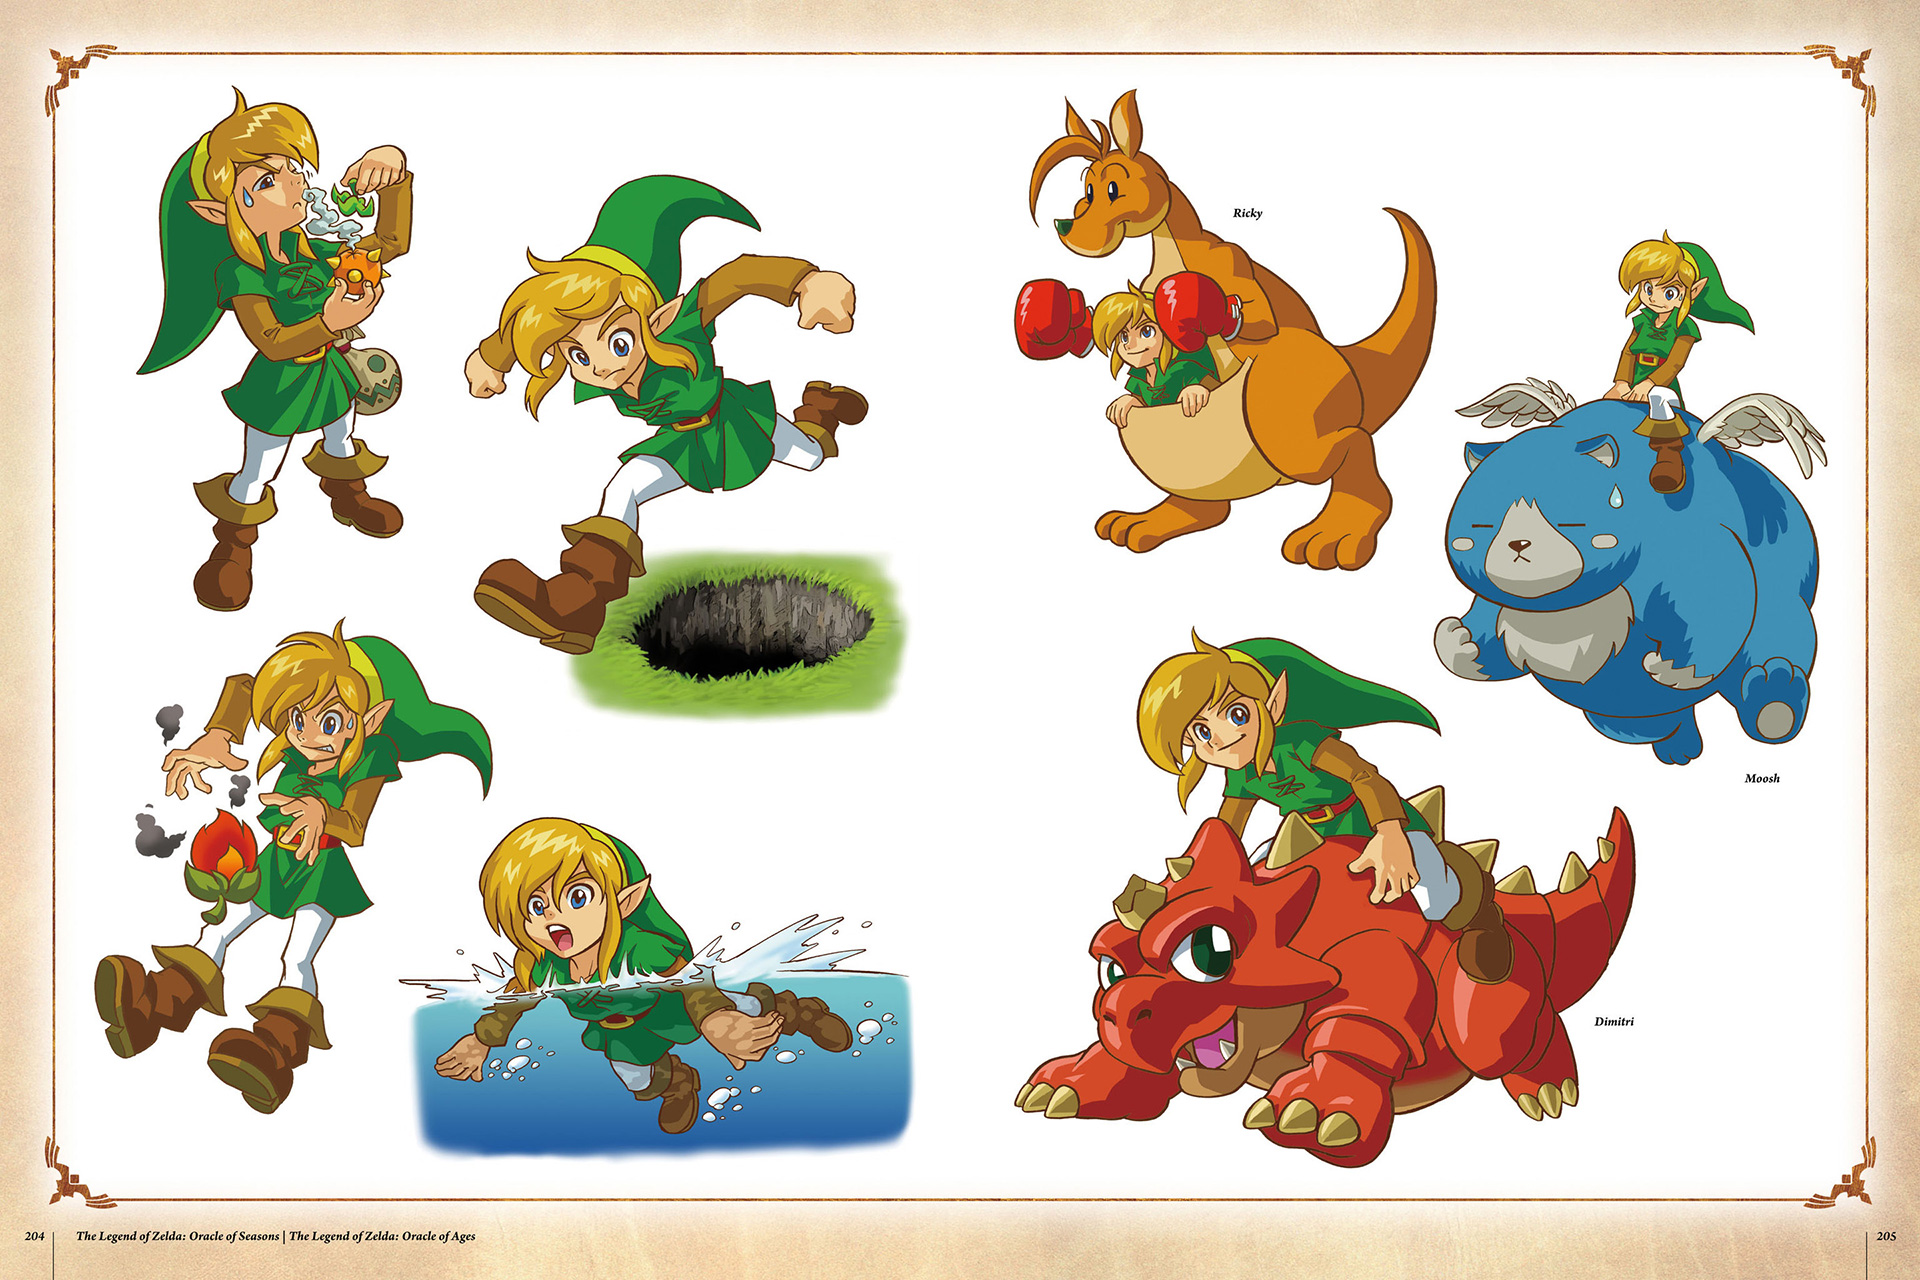 Legend Of Zelda Nes Era Authentic Print Ad / Poster Game Promo Art